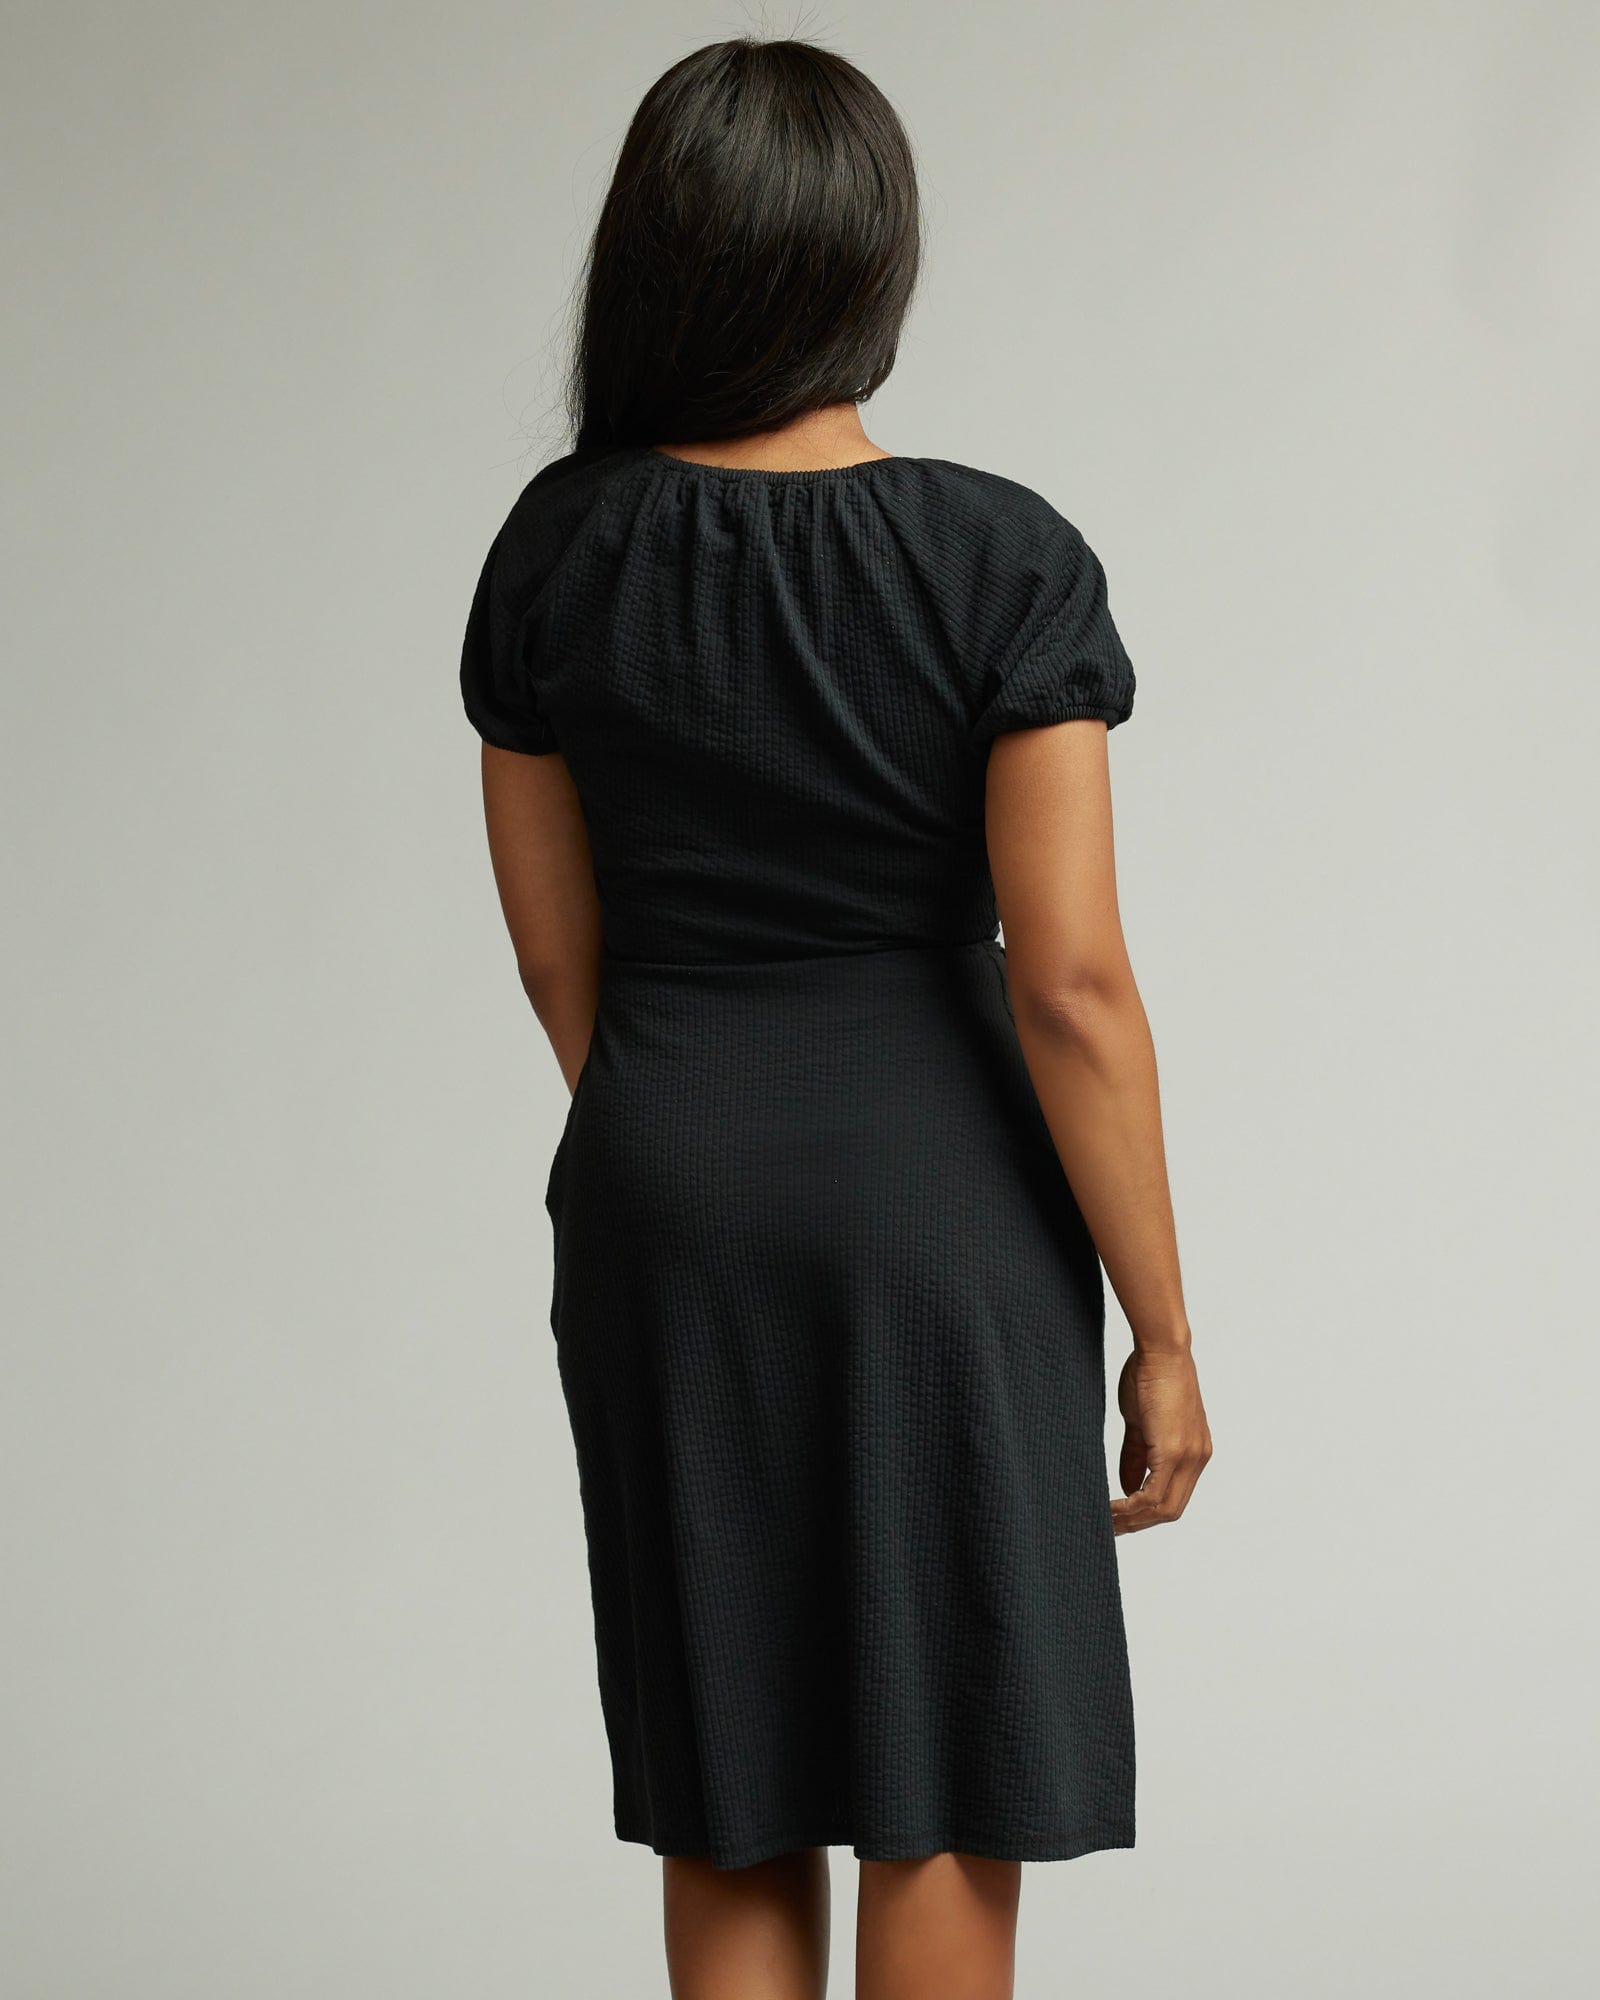 Woman in a short sleeve, knee-length, black dress